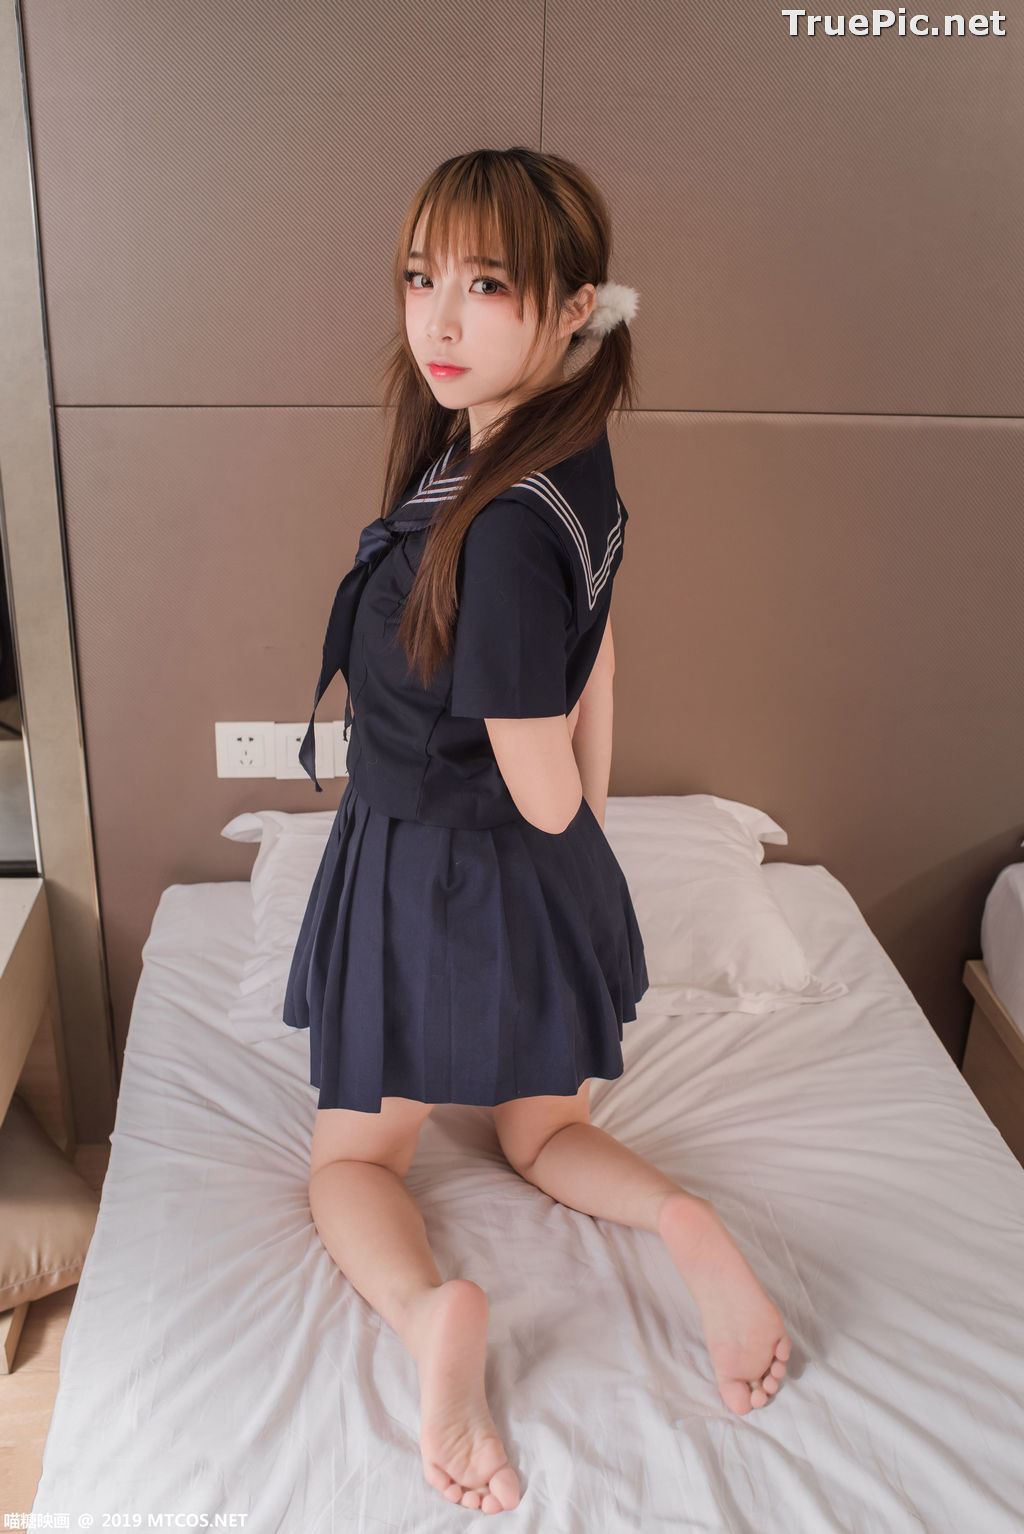 Image [MTCos] 喵糖映画 Vol.042 – Chinese Cute Model – Black Japanese School Uniform - TruePic.net - Picture-32